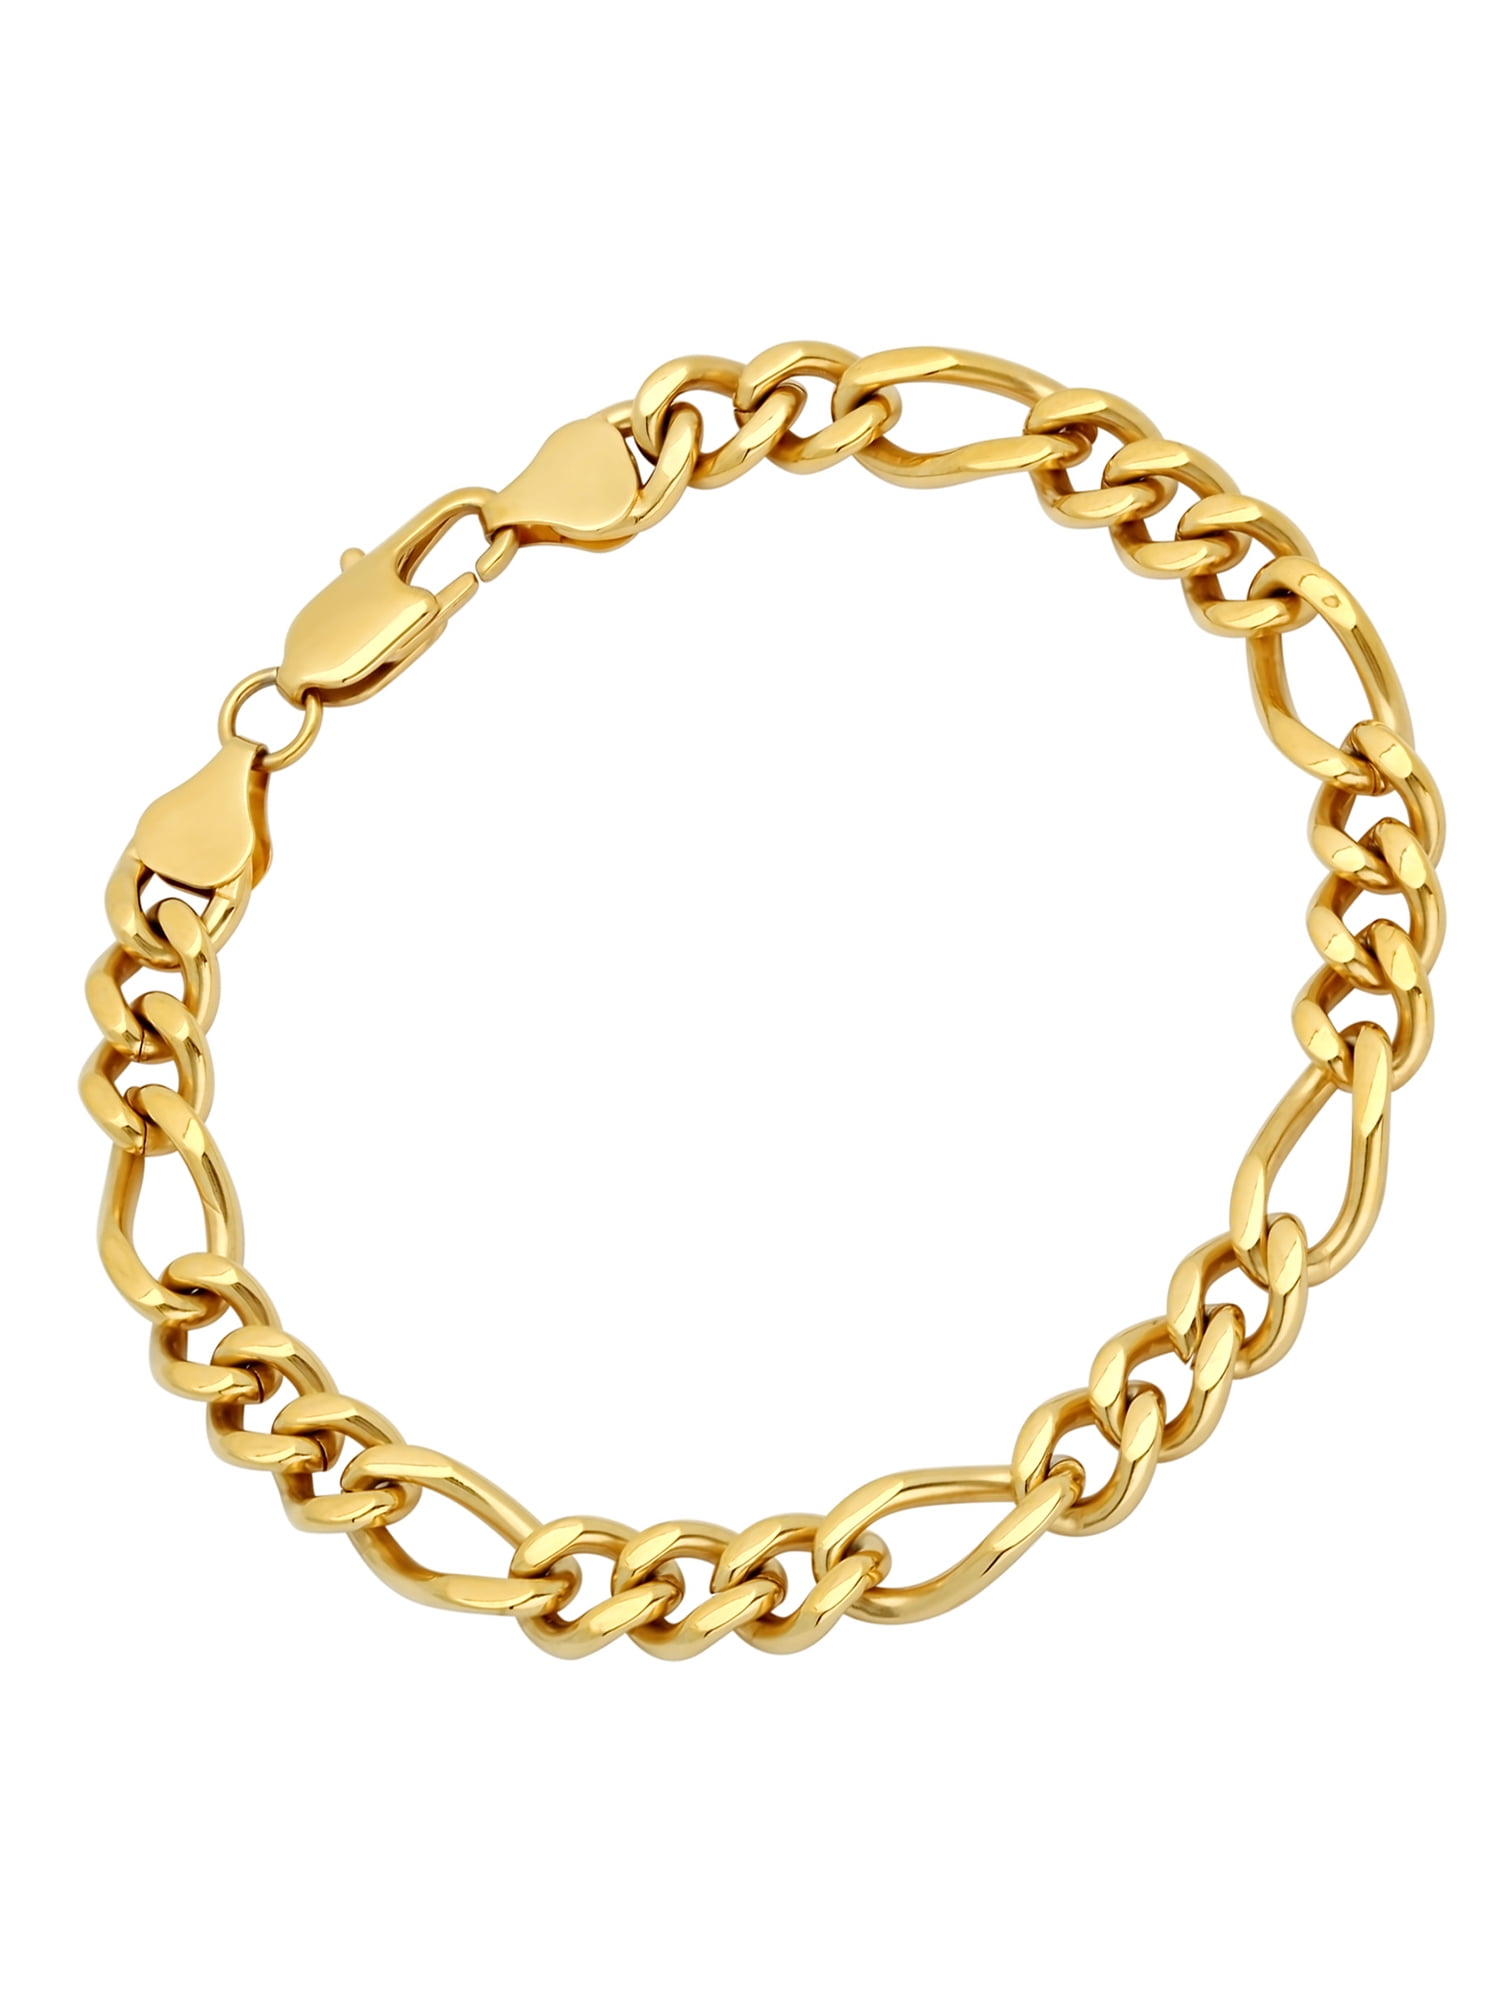 Men's Gold-Tone Stainless Steel Figaro Bracelet 9 inch - Mens Bracelet, Size: One size, Yellow